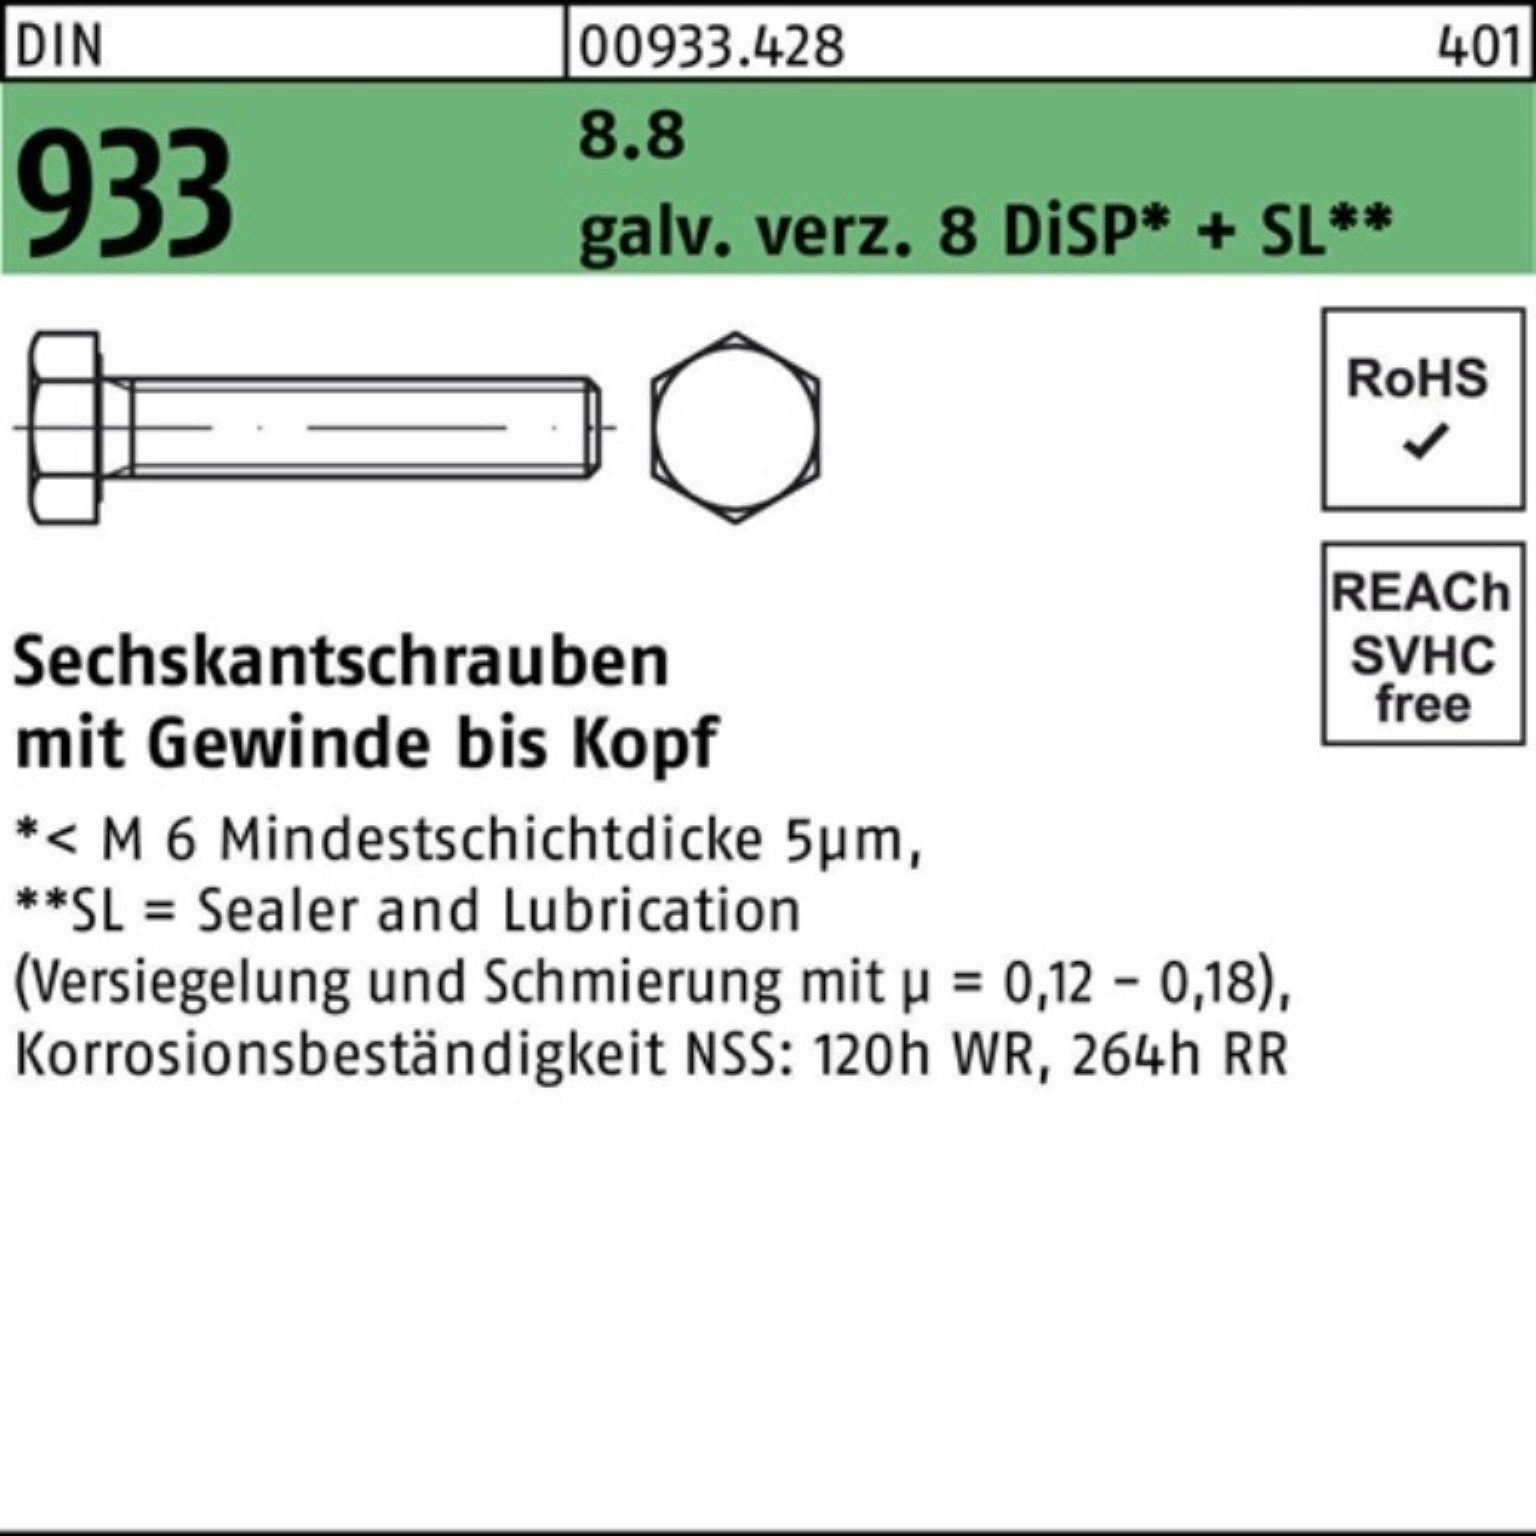 Pack Sechskantschraube + 500er Reyher M4x VG 8.8 50 DiSP gal SL Sechskantschraube 933 30 Zn DIN